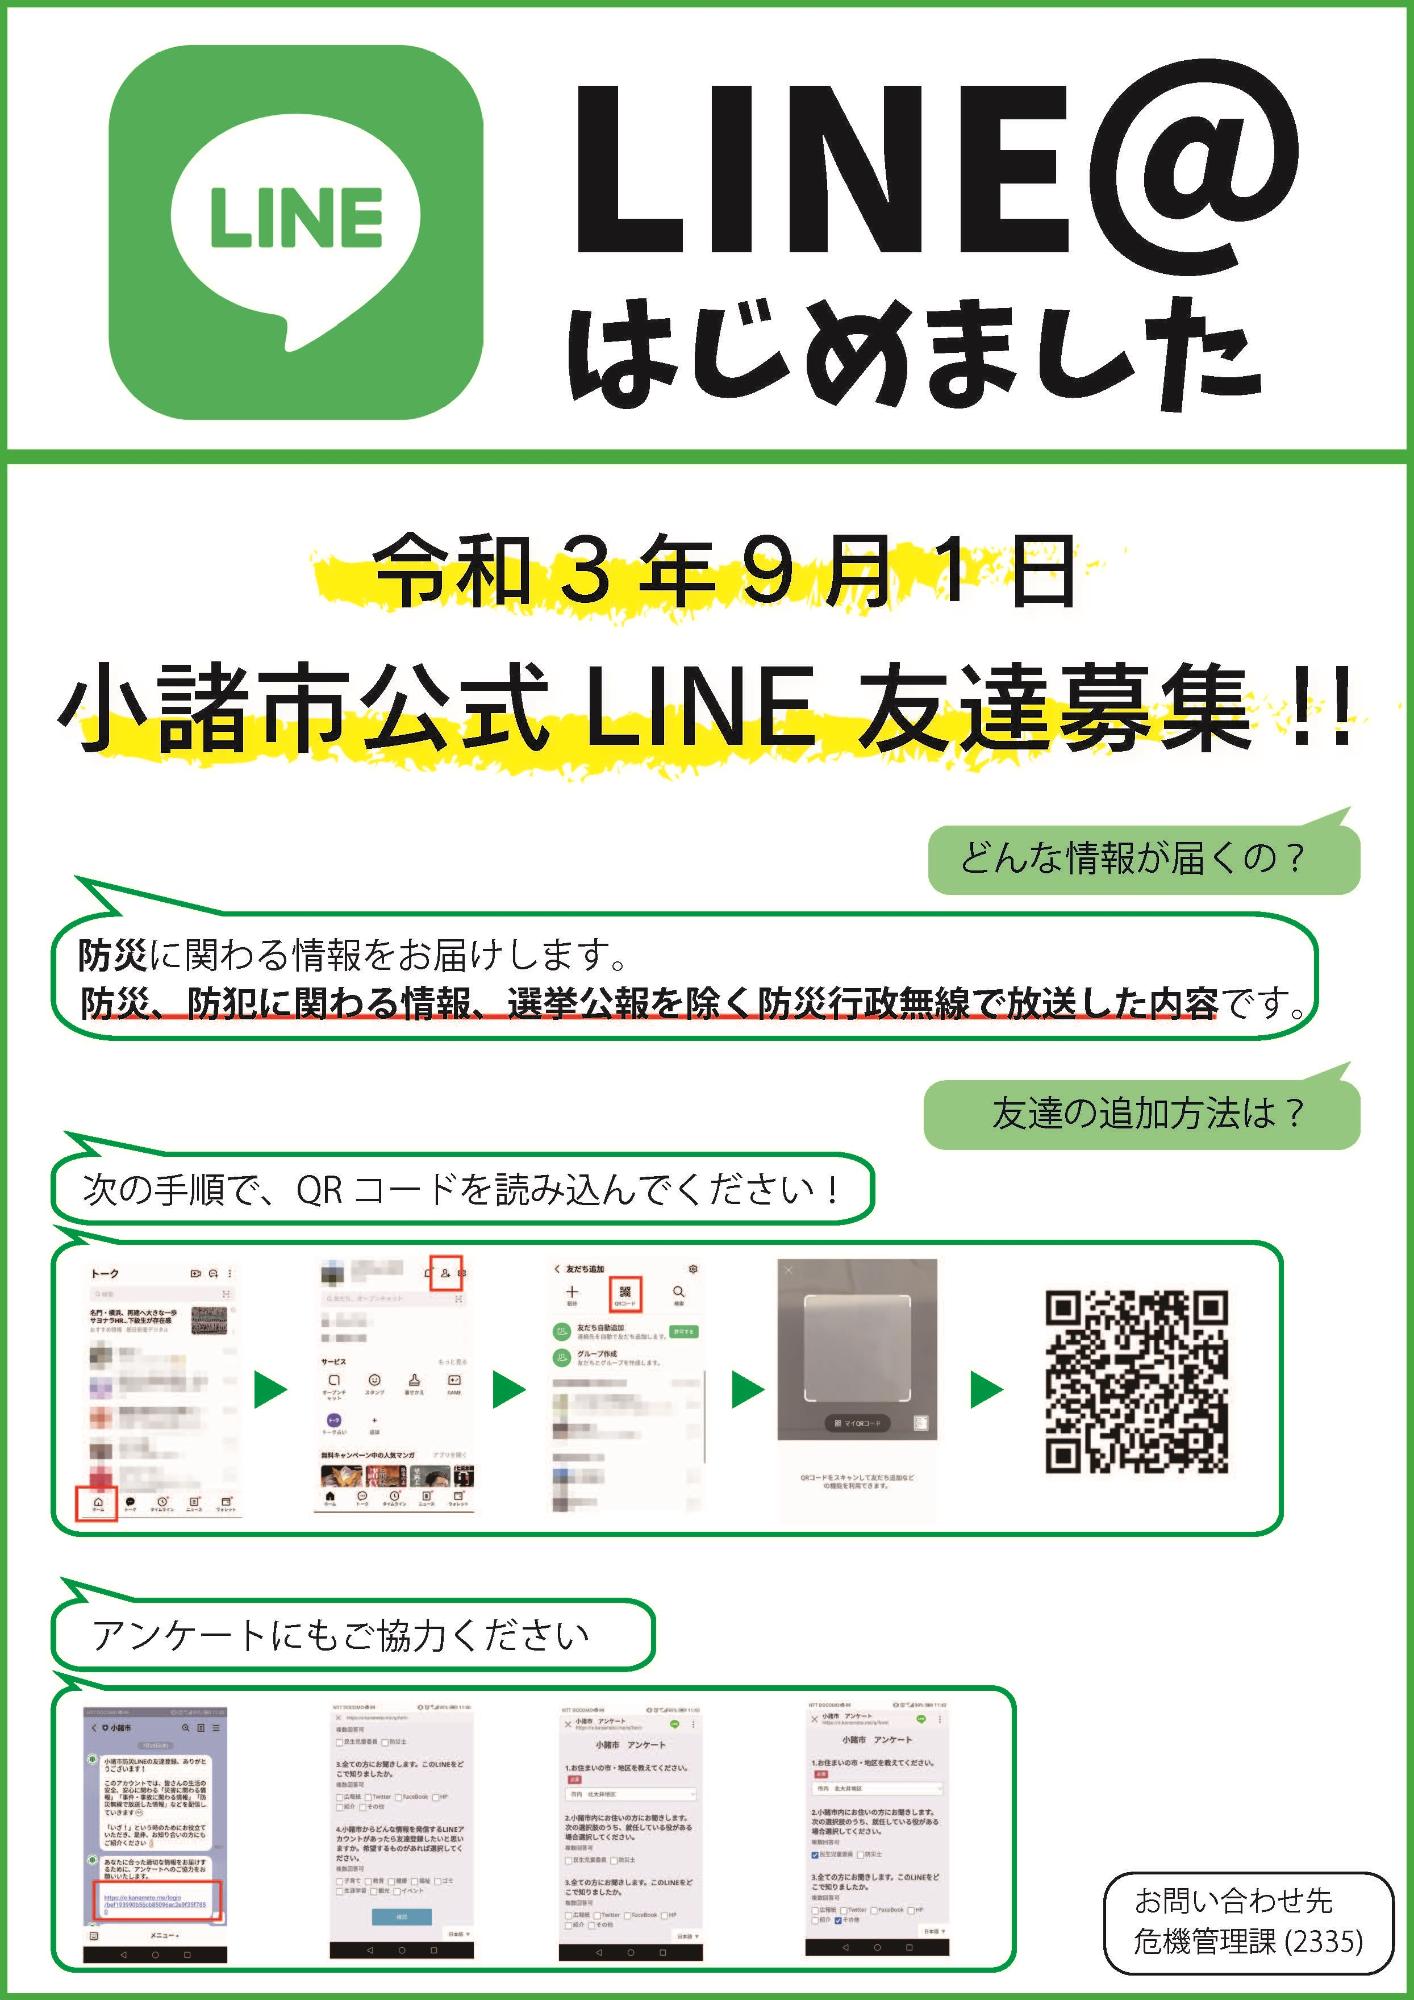 line4